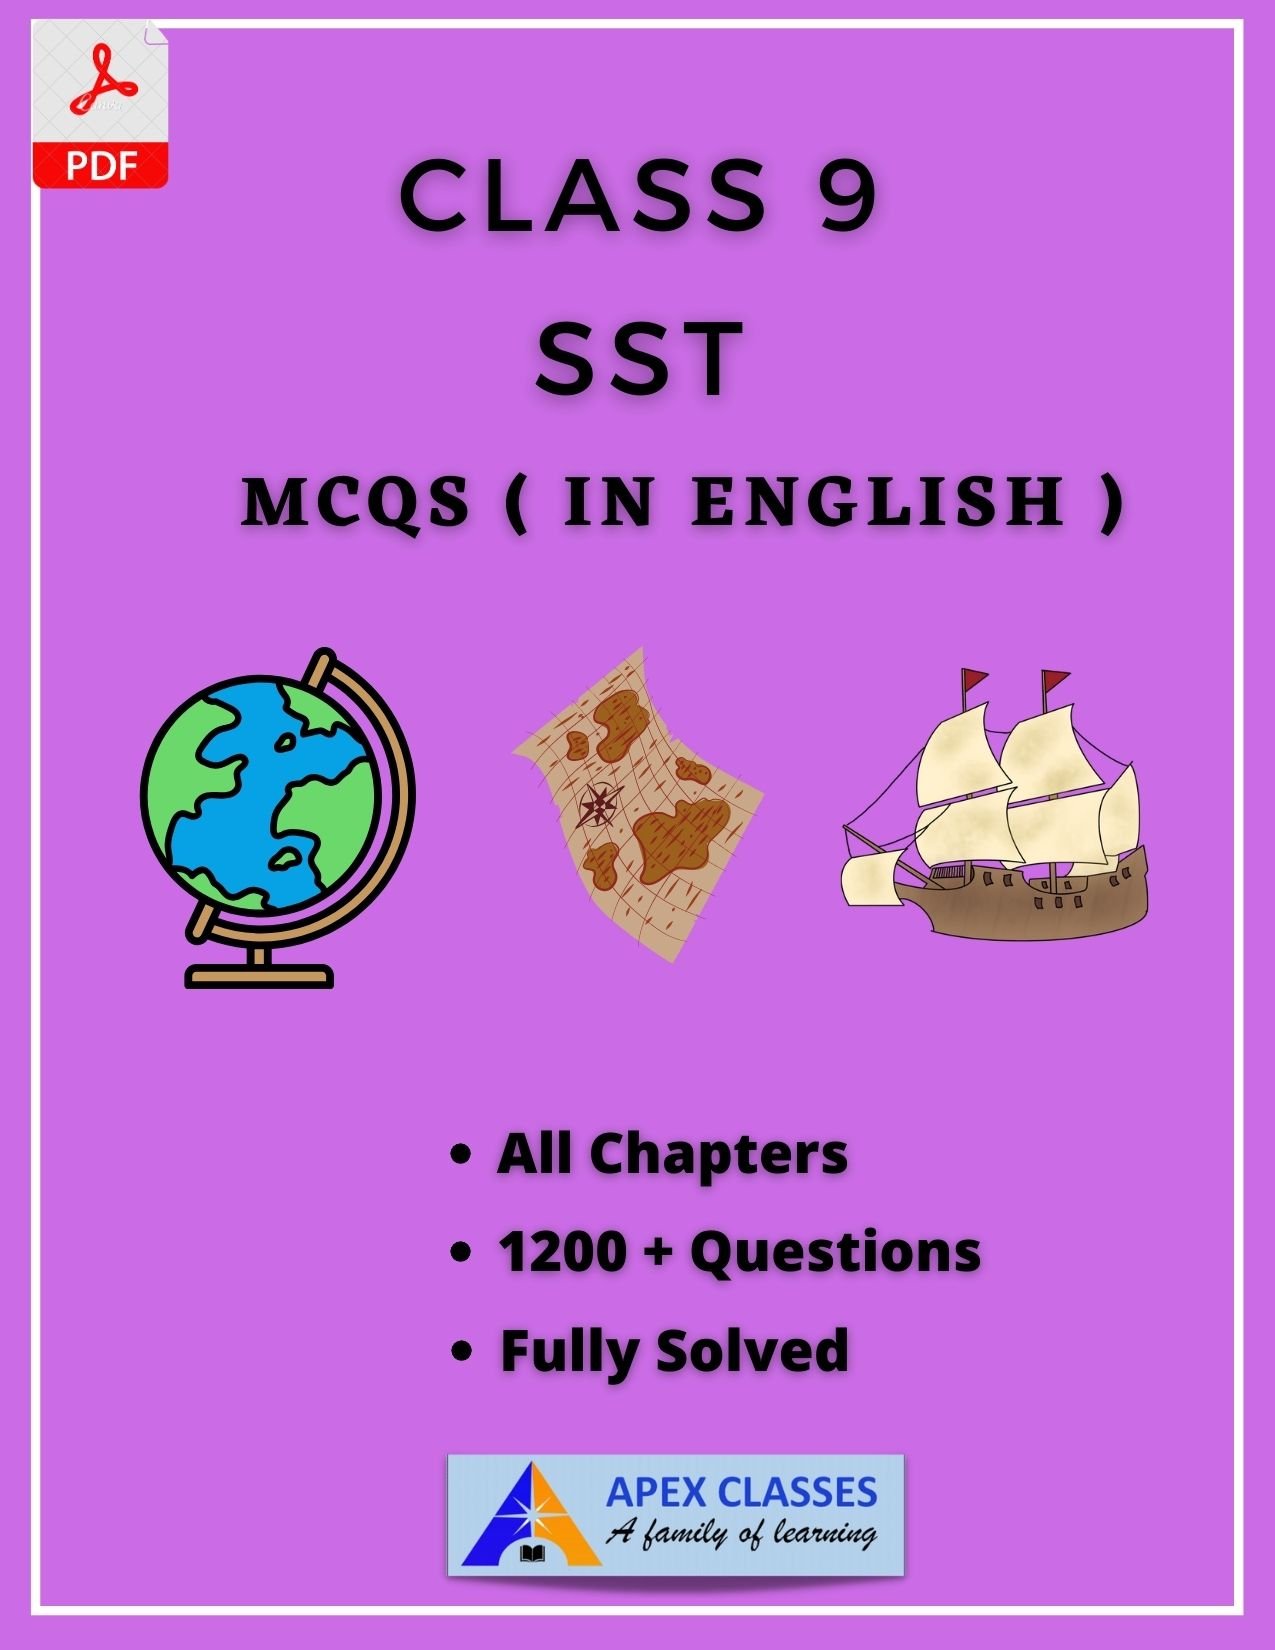 Class 9 SST MCQs PDF in English